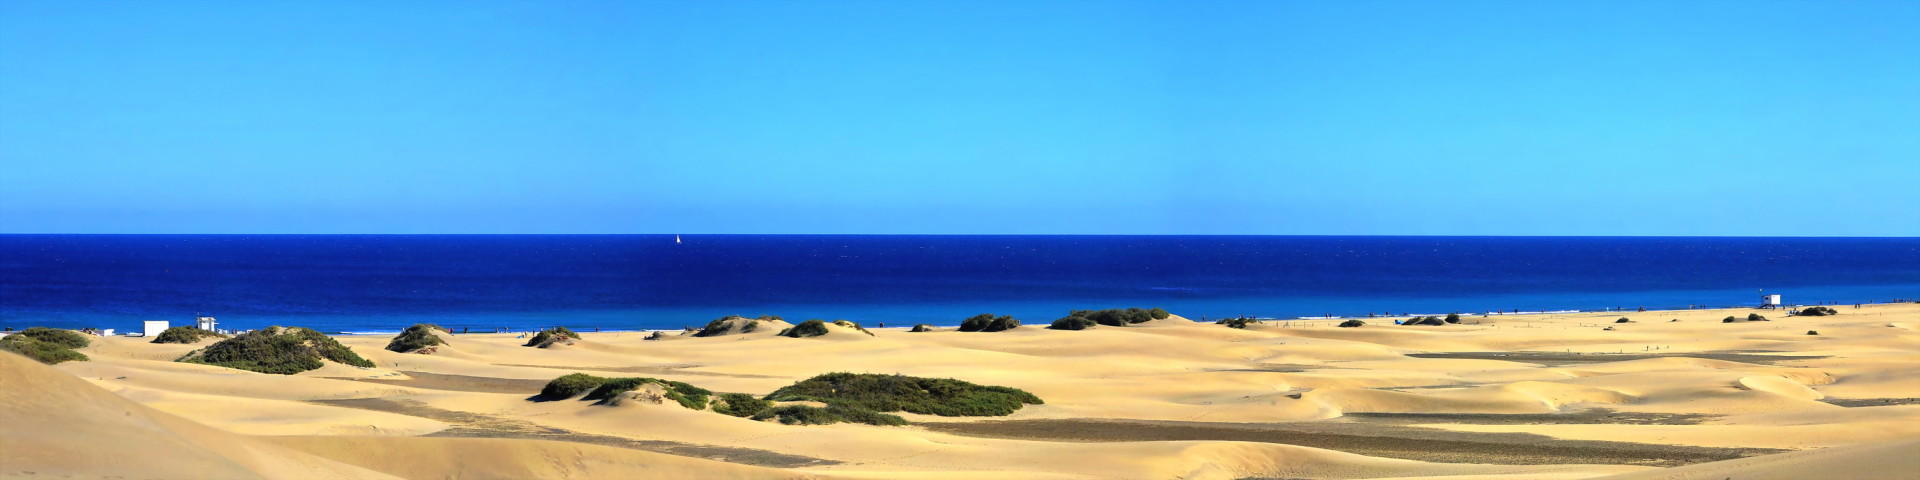 Playa del Ingles, Gran Canaria